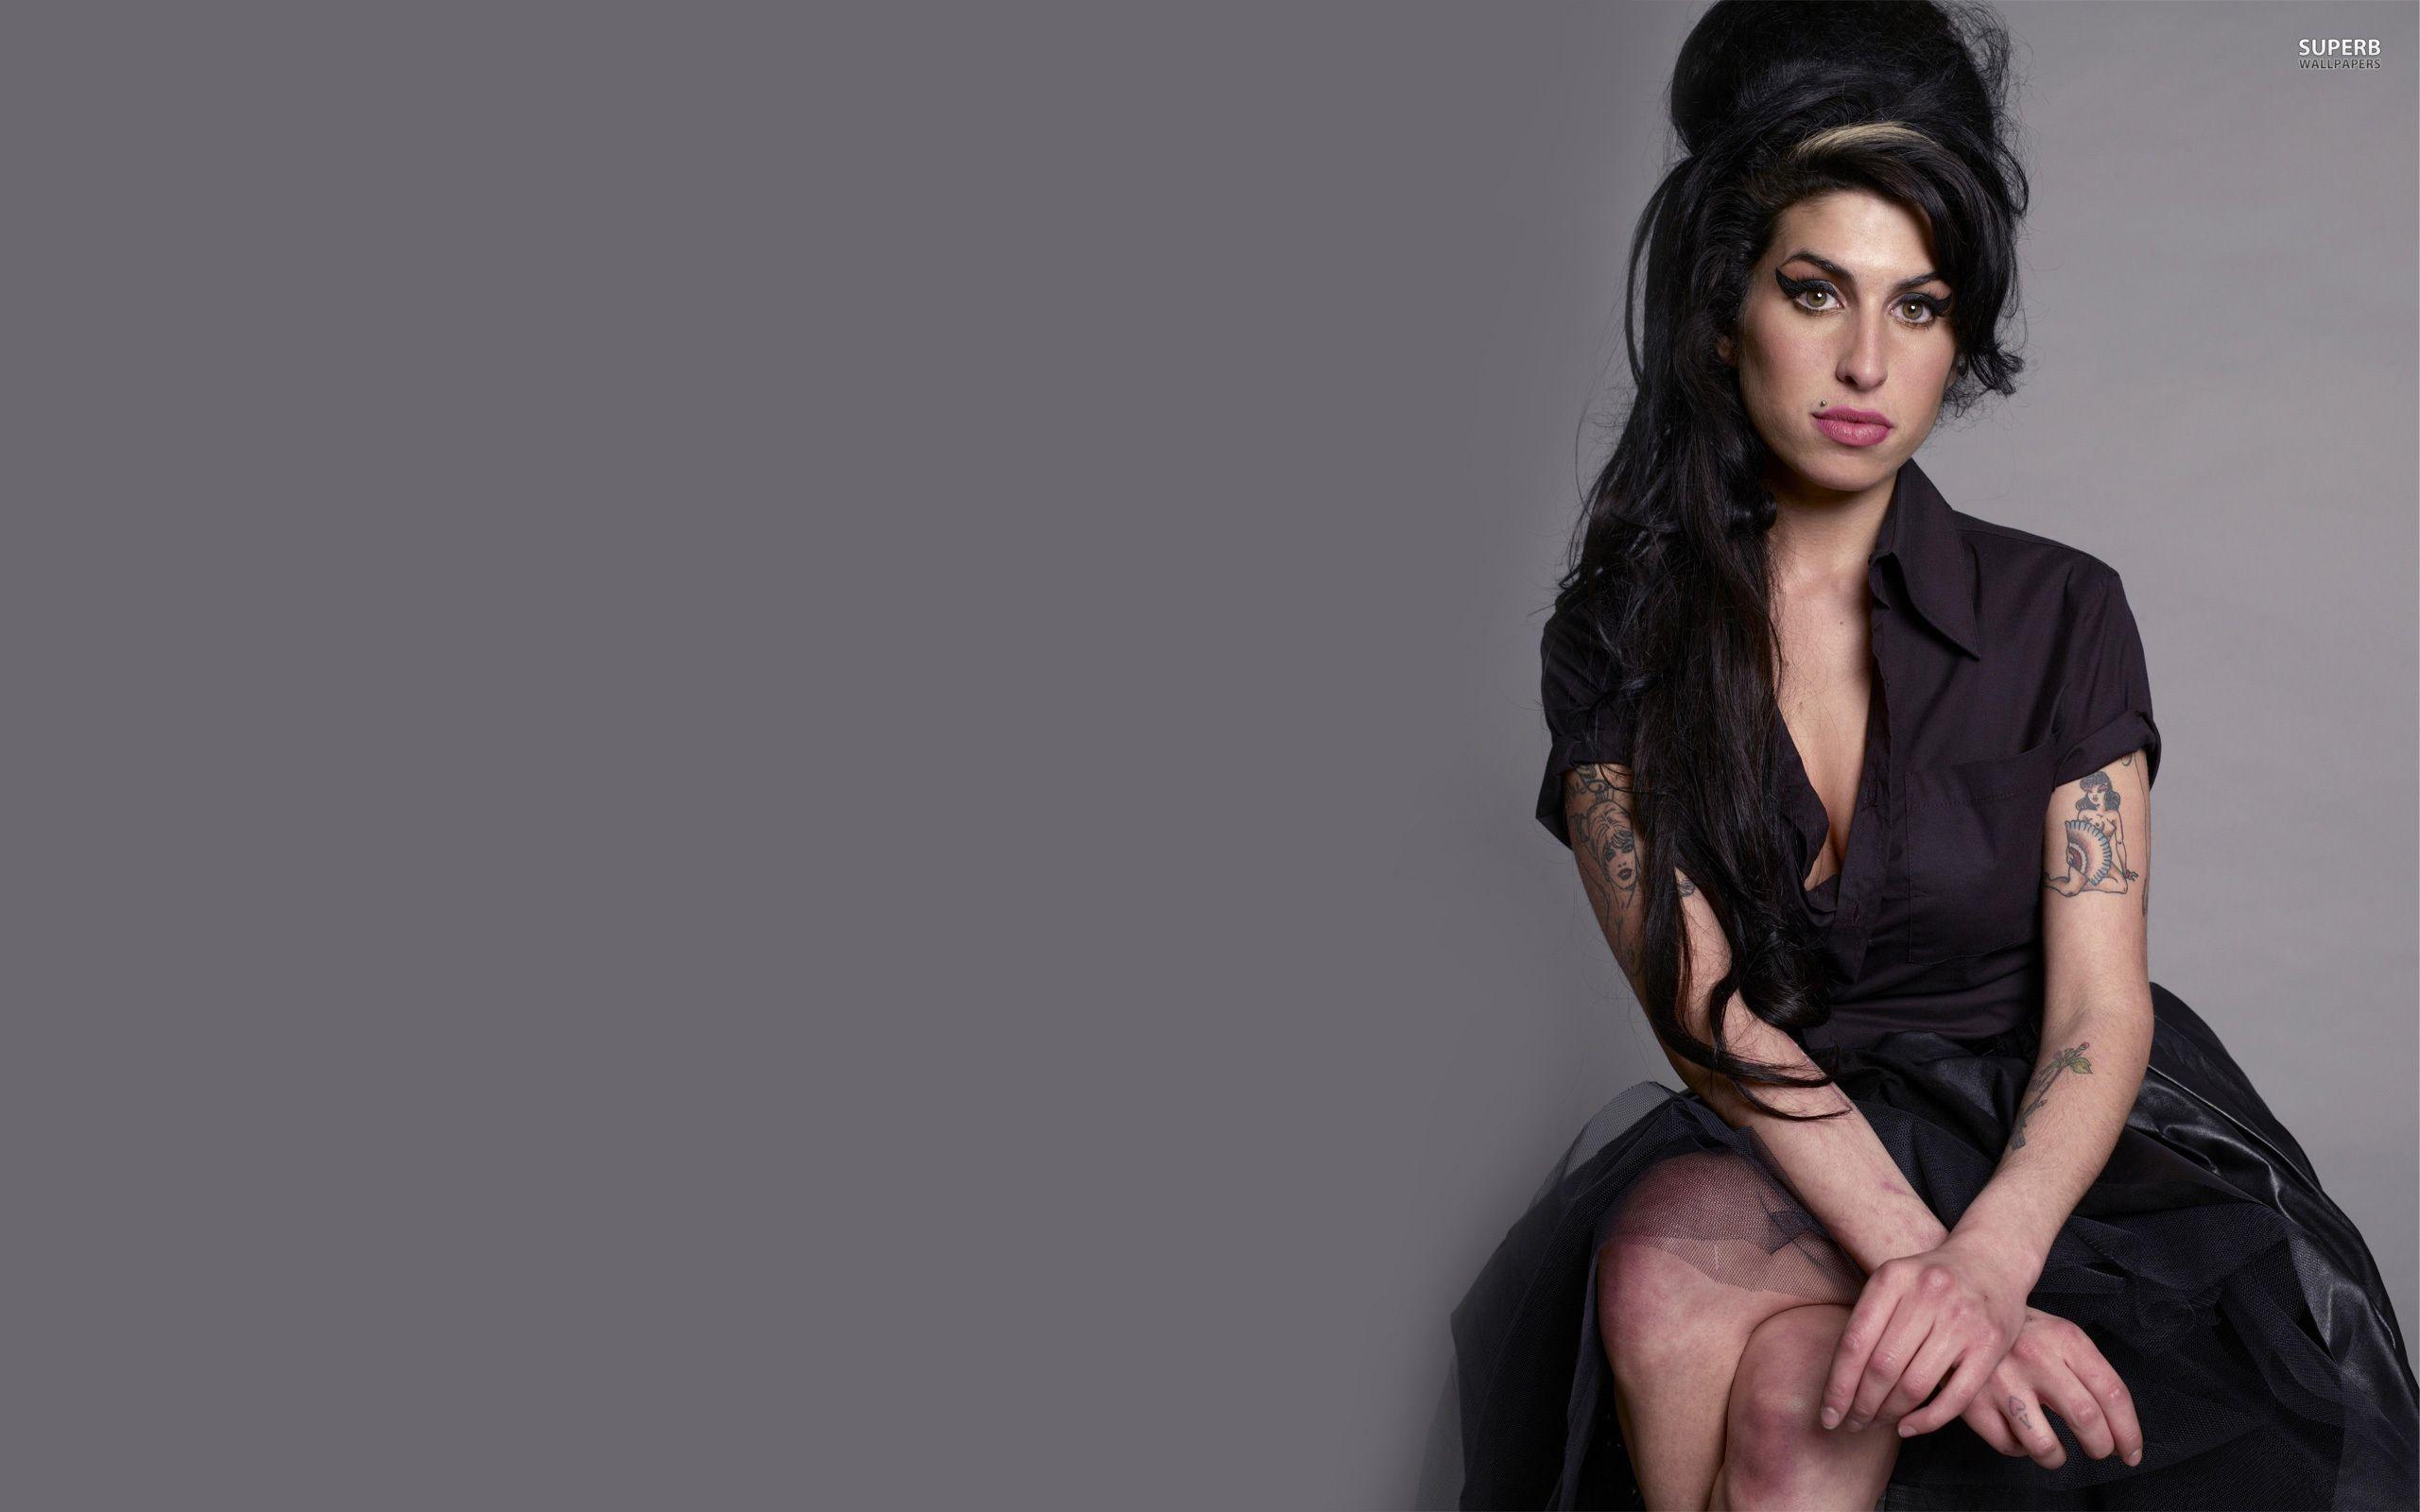 Amy Winehouse Wallpaper. Ultra High Quality Wallpaper